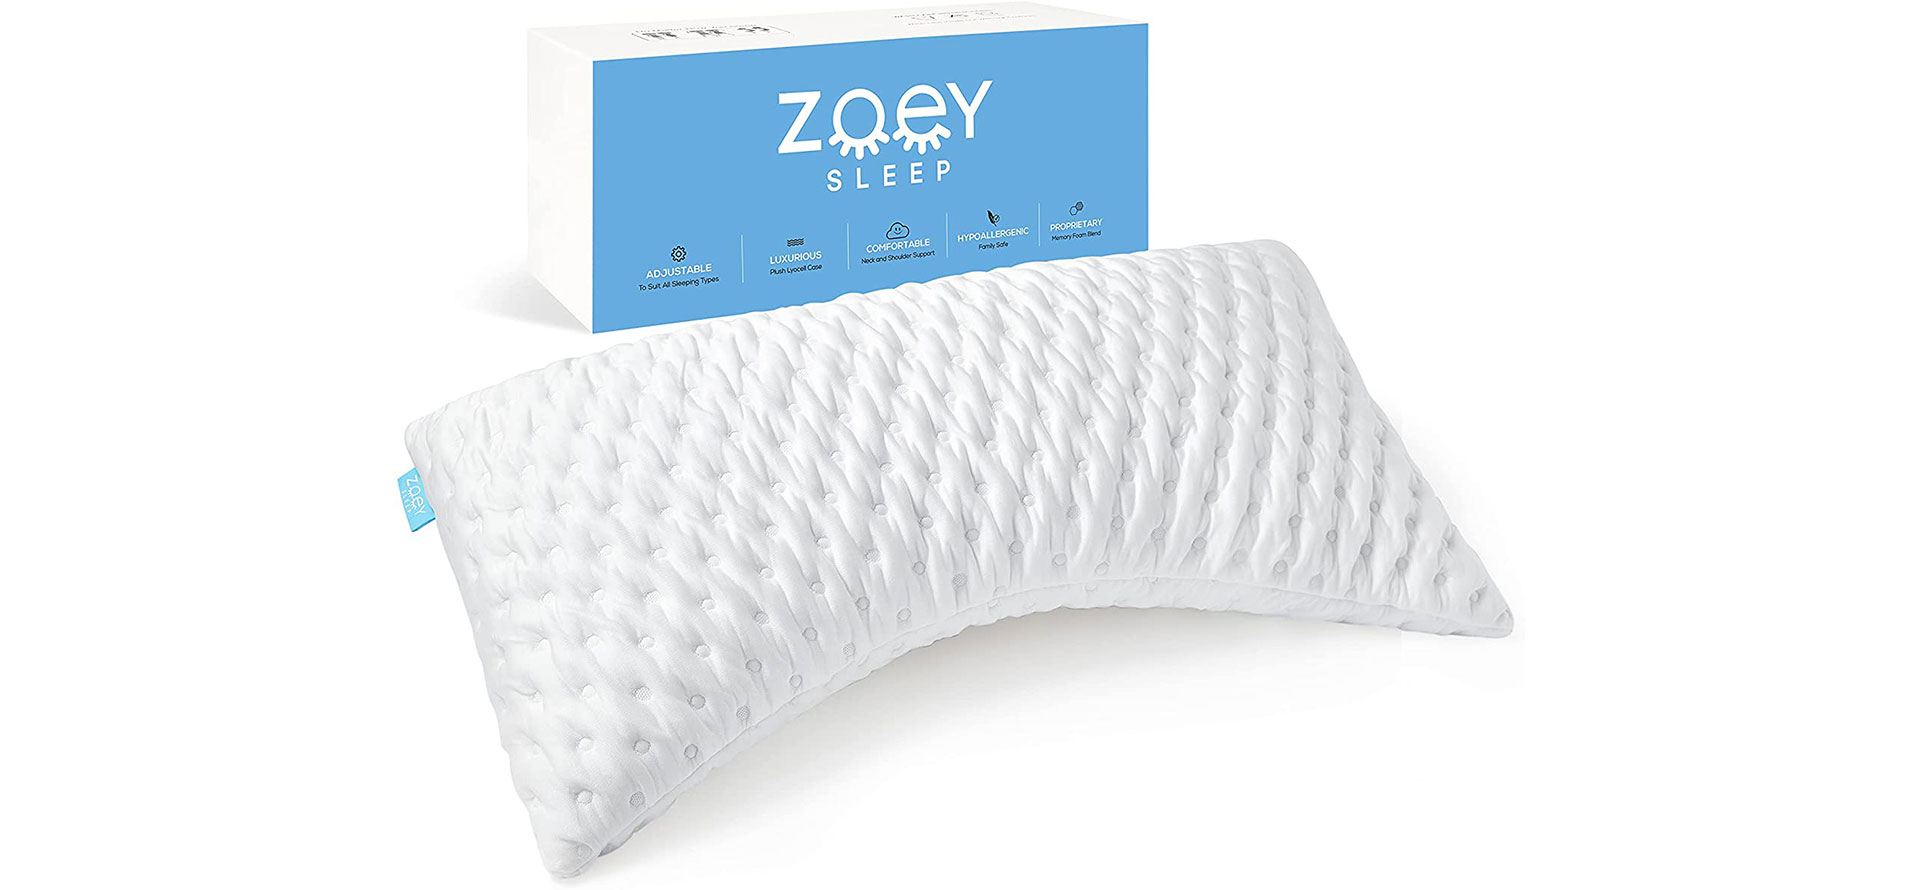 Zoey memory foam pillow.